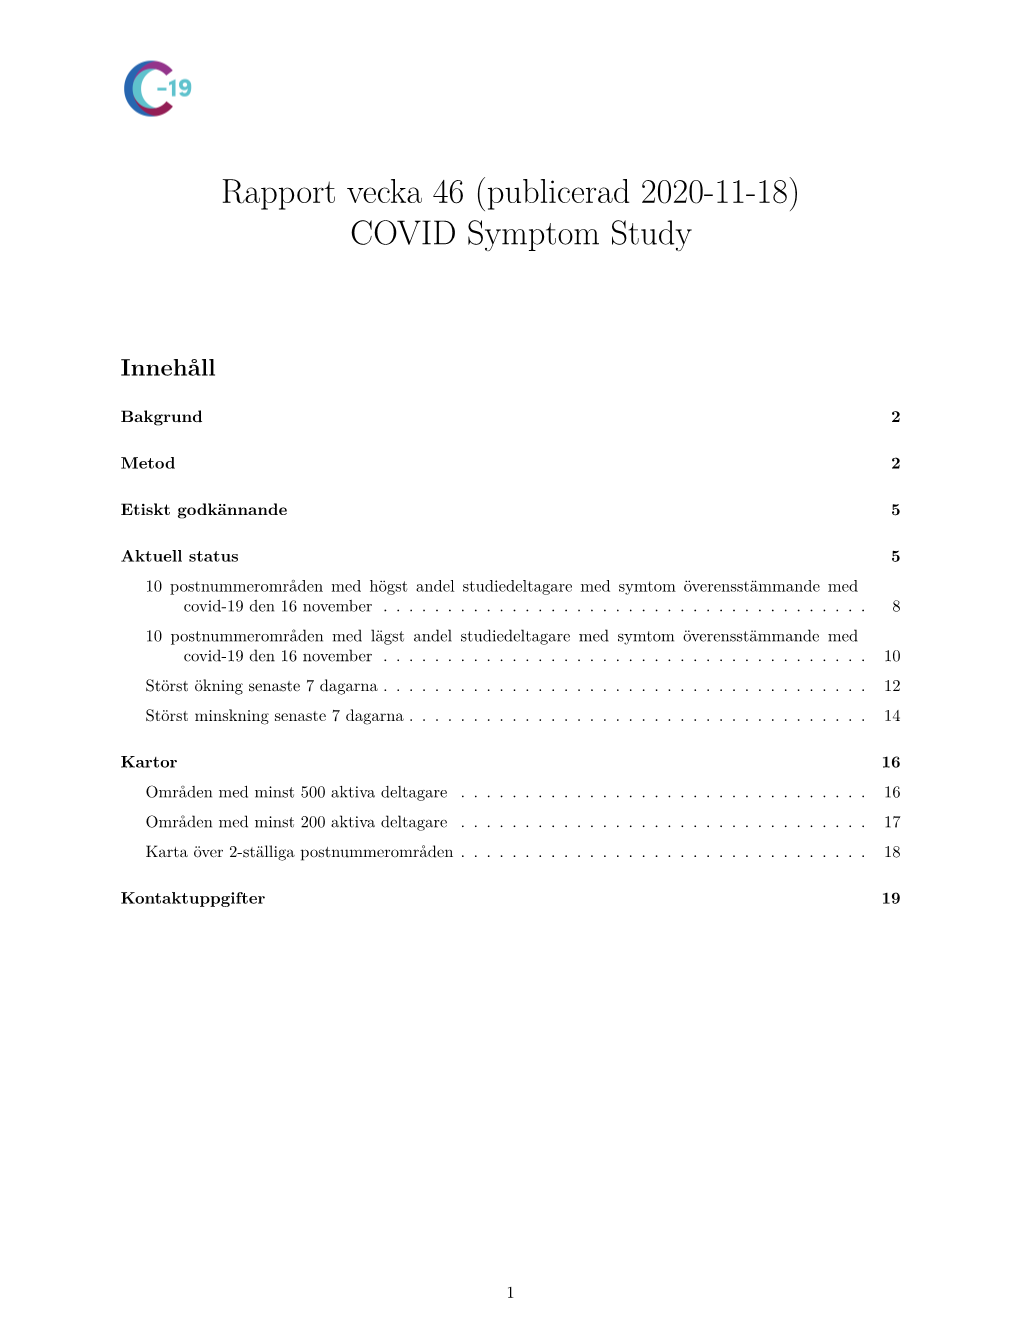 Rapport Vecka 46 (Publicerad 2020-11-18) COVID Symptom Study